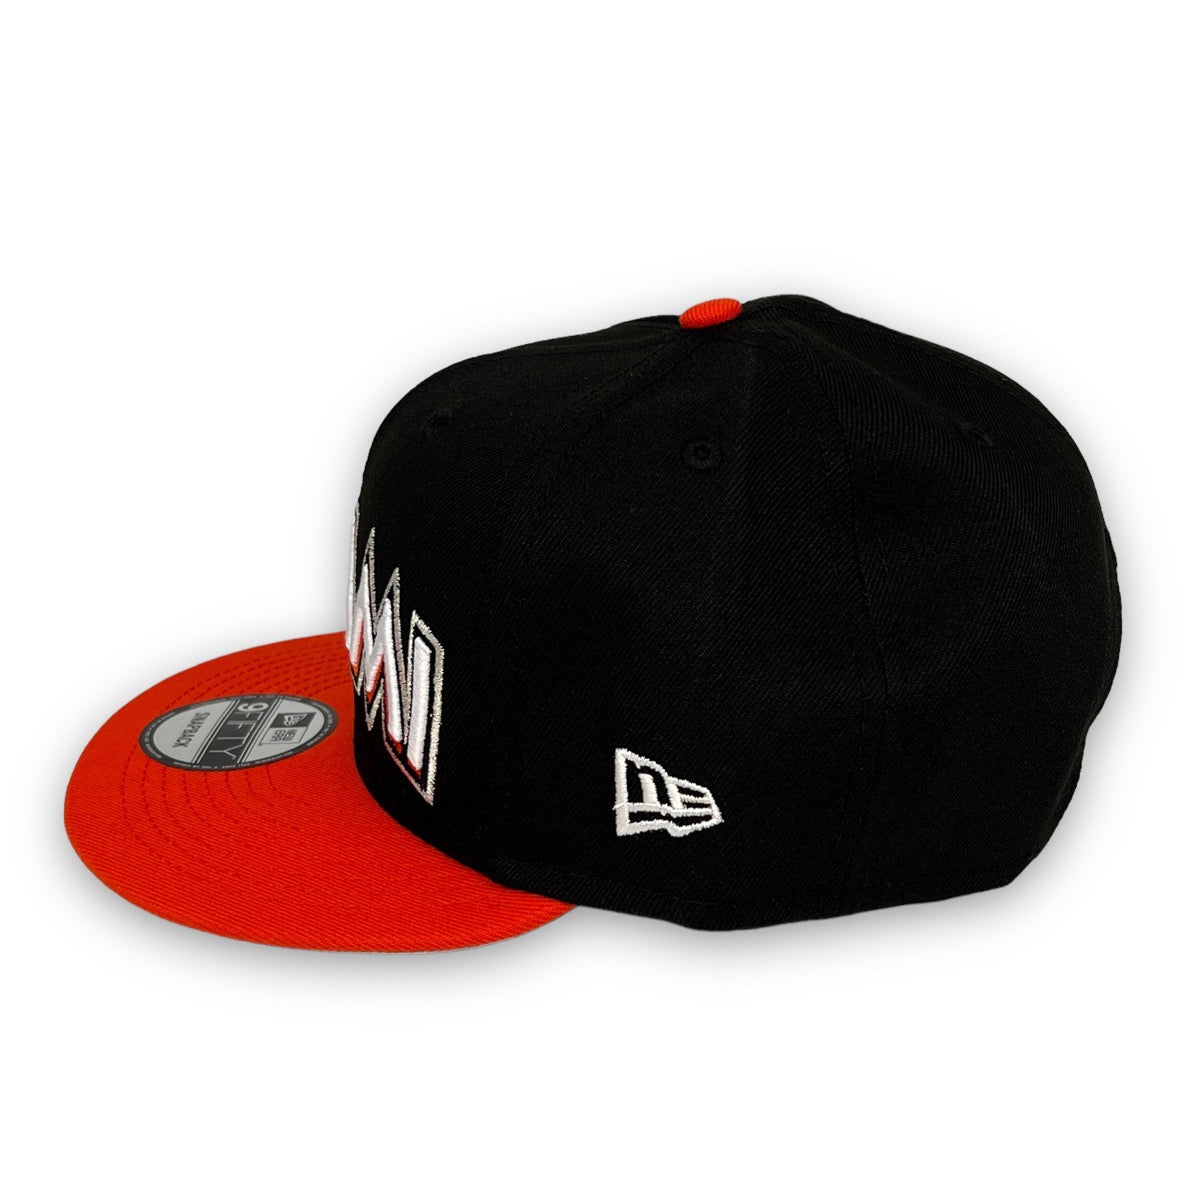 New Era BLANK SNAPBACK Red Adjustable Hat